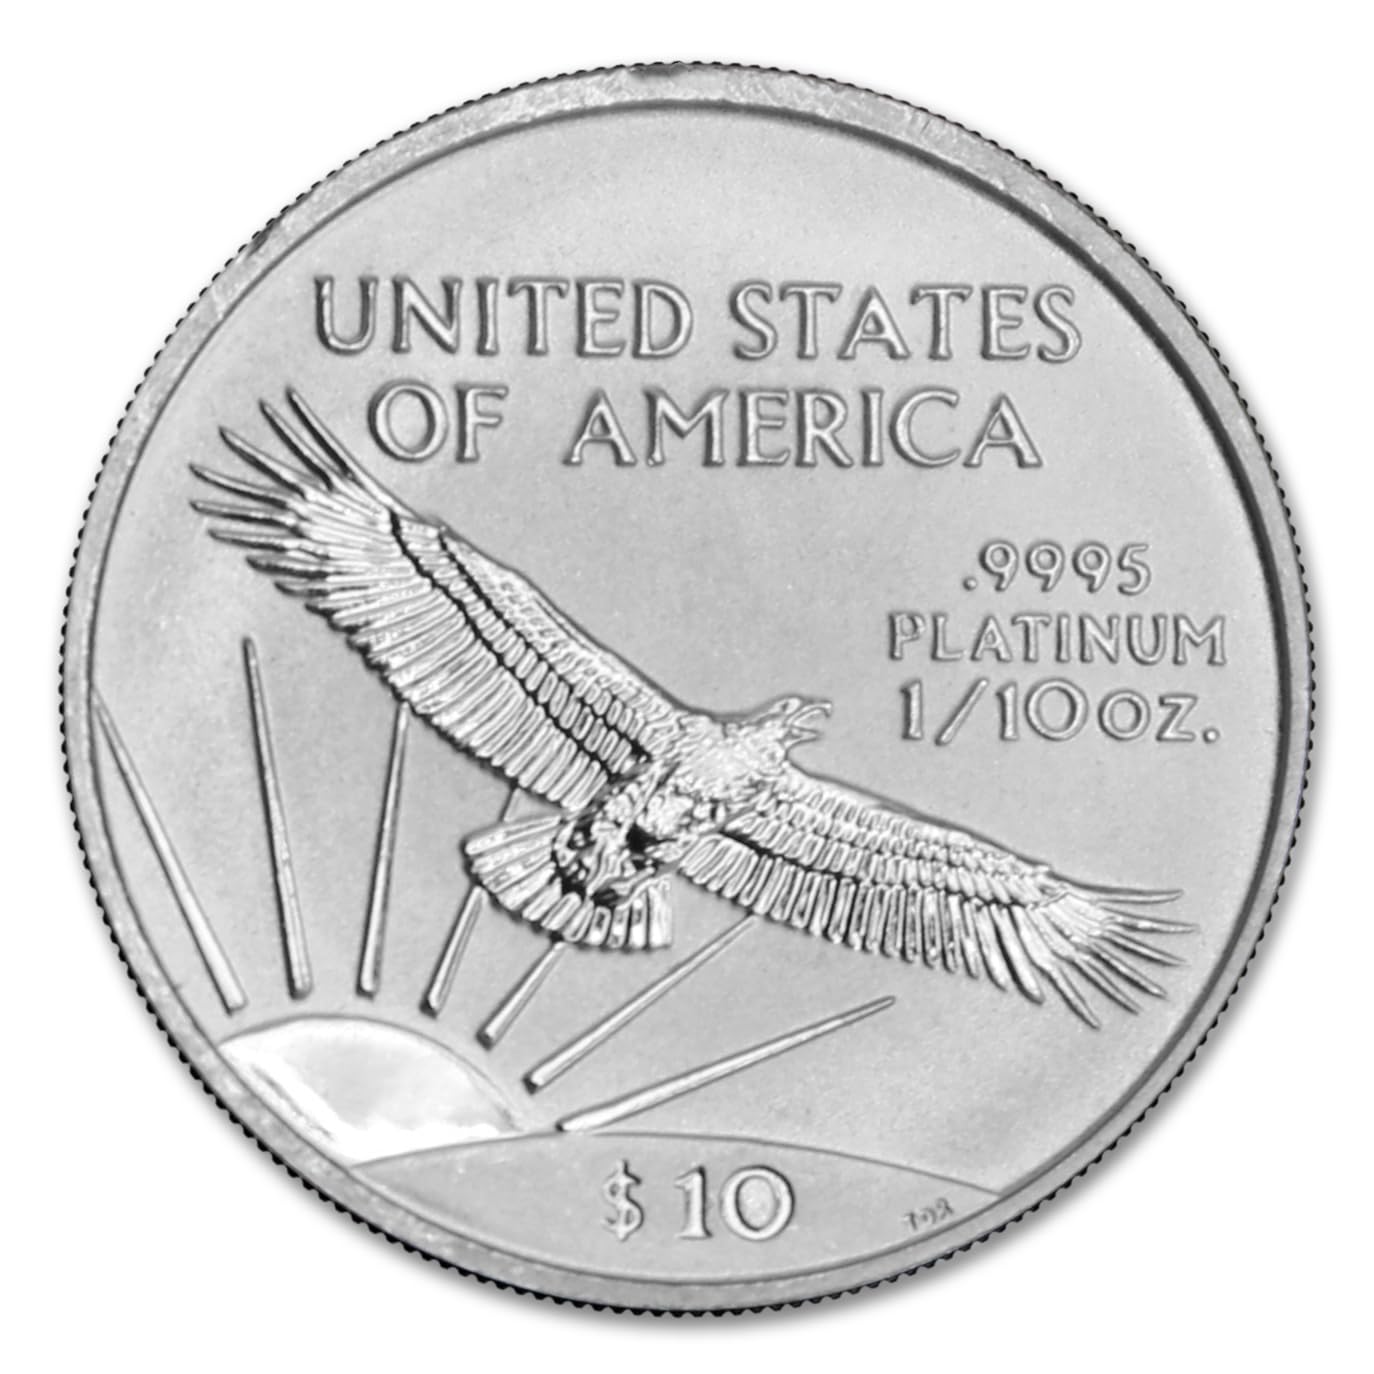 Rare 1/10 oz American Platinum Eagle Coin BU - Random Year with COA